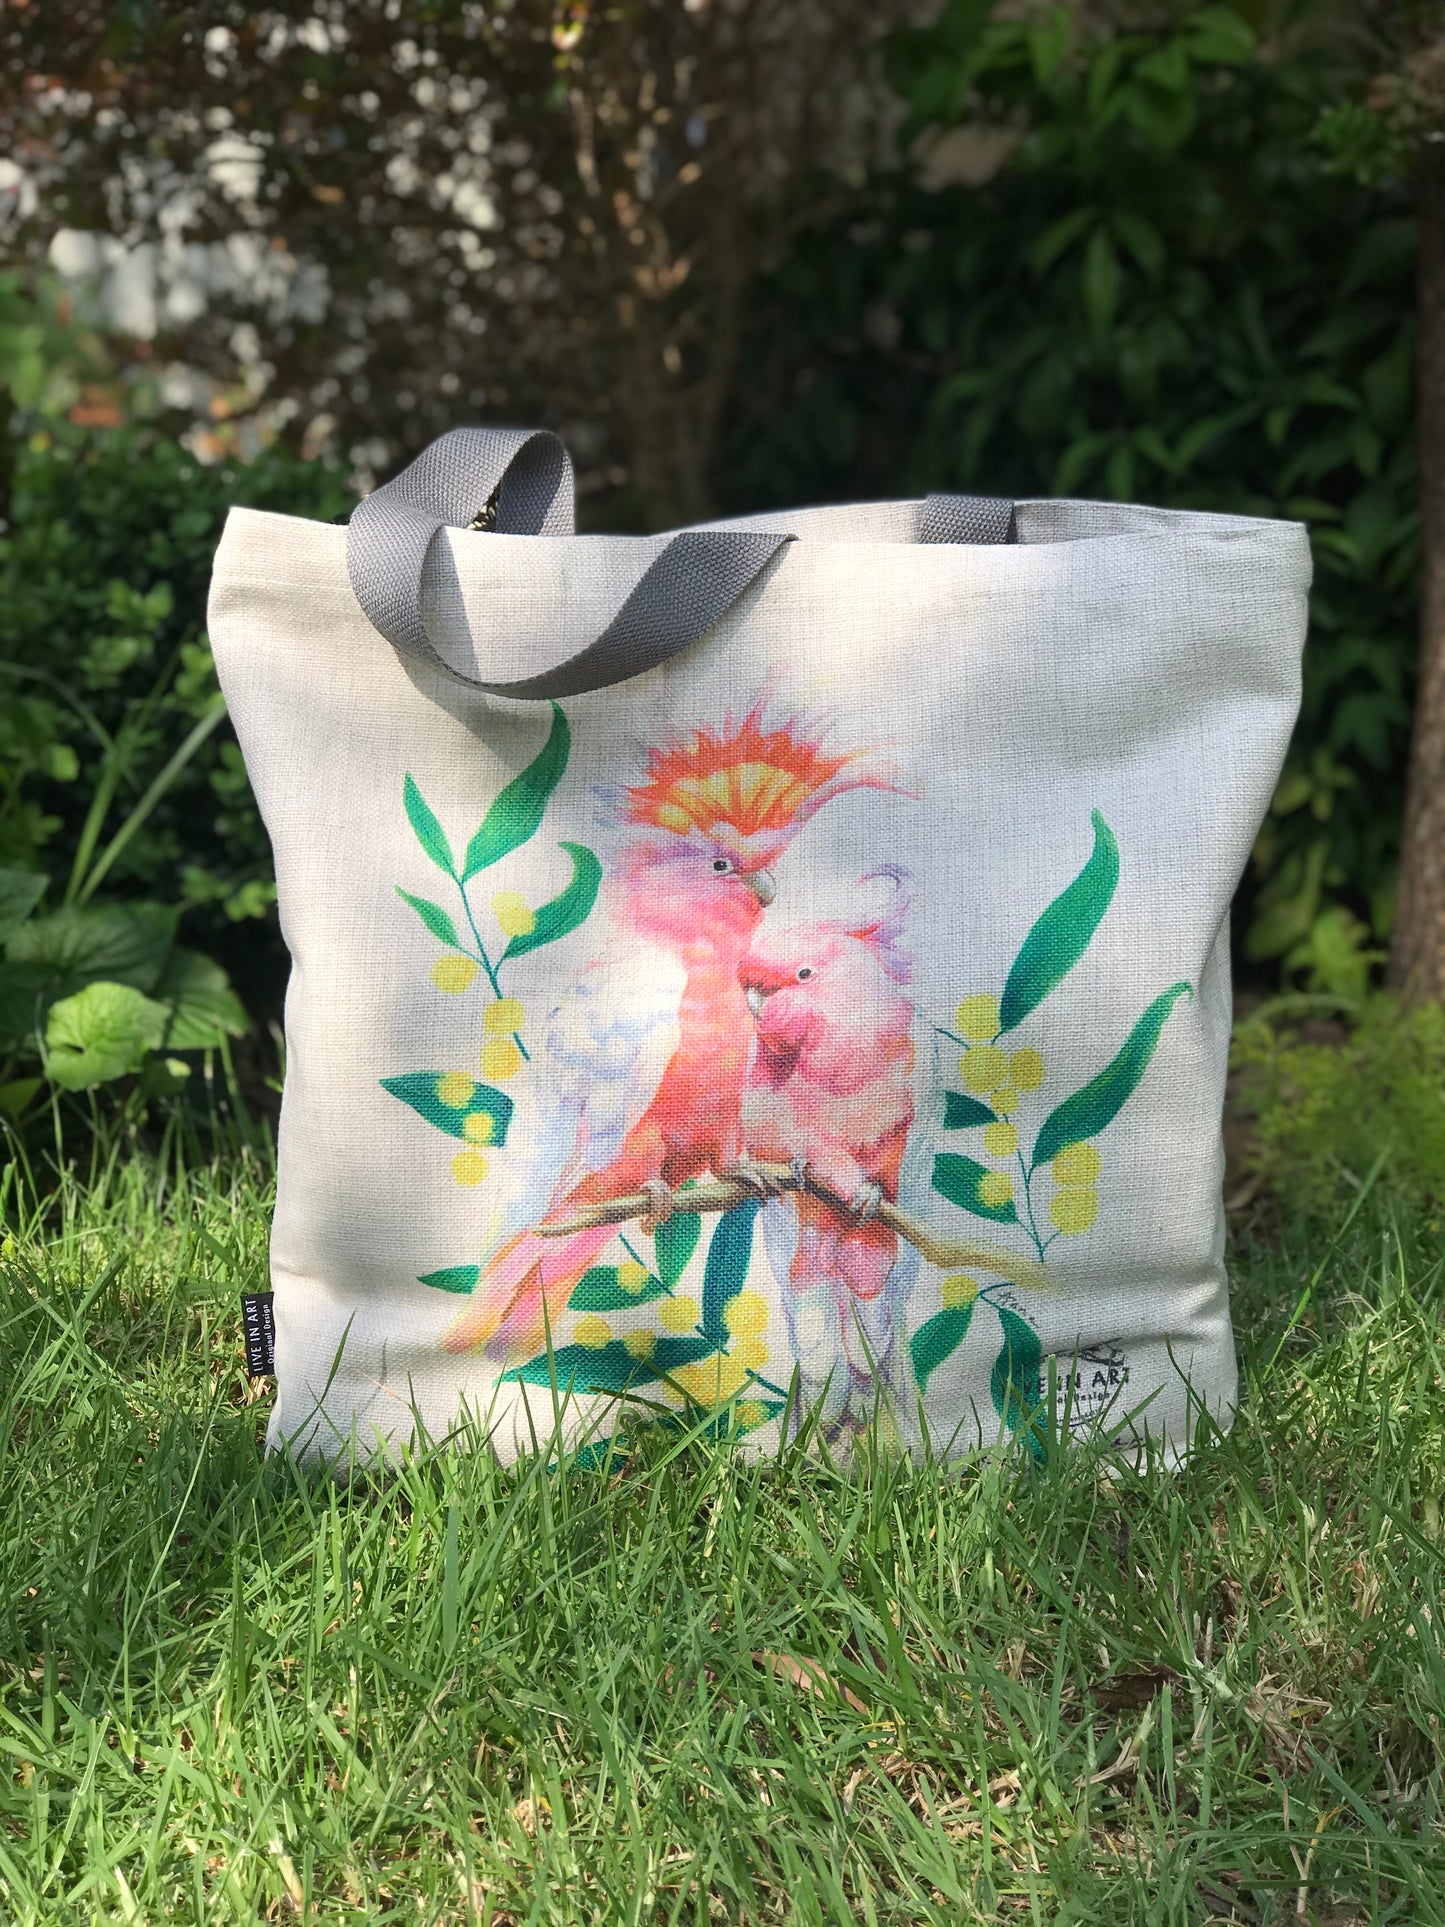 Cockatoo Tote bag,Art bag,Gift,Australian Bird